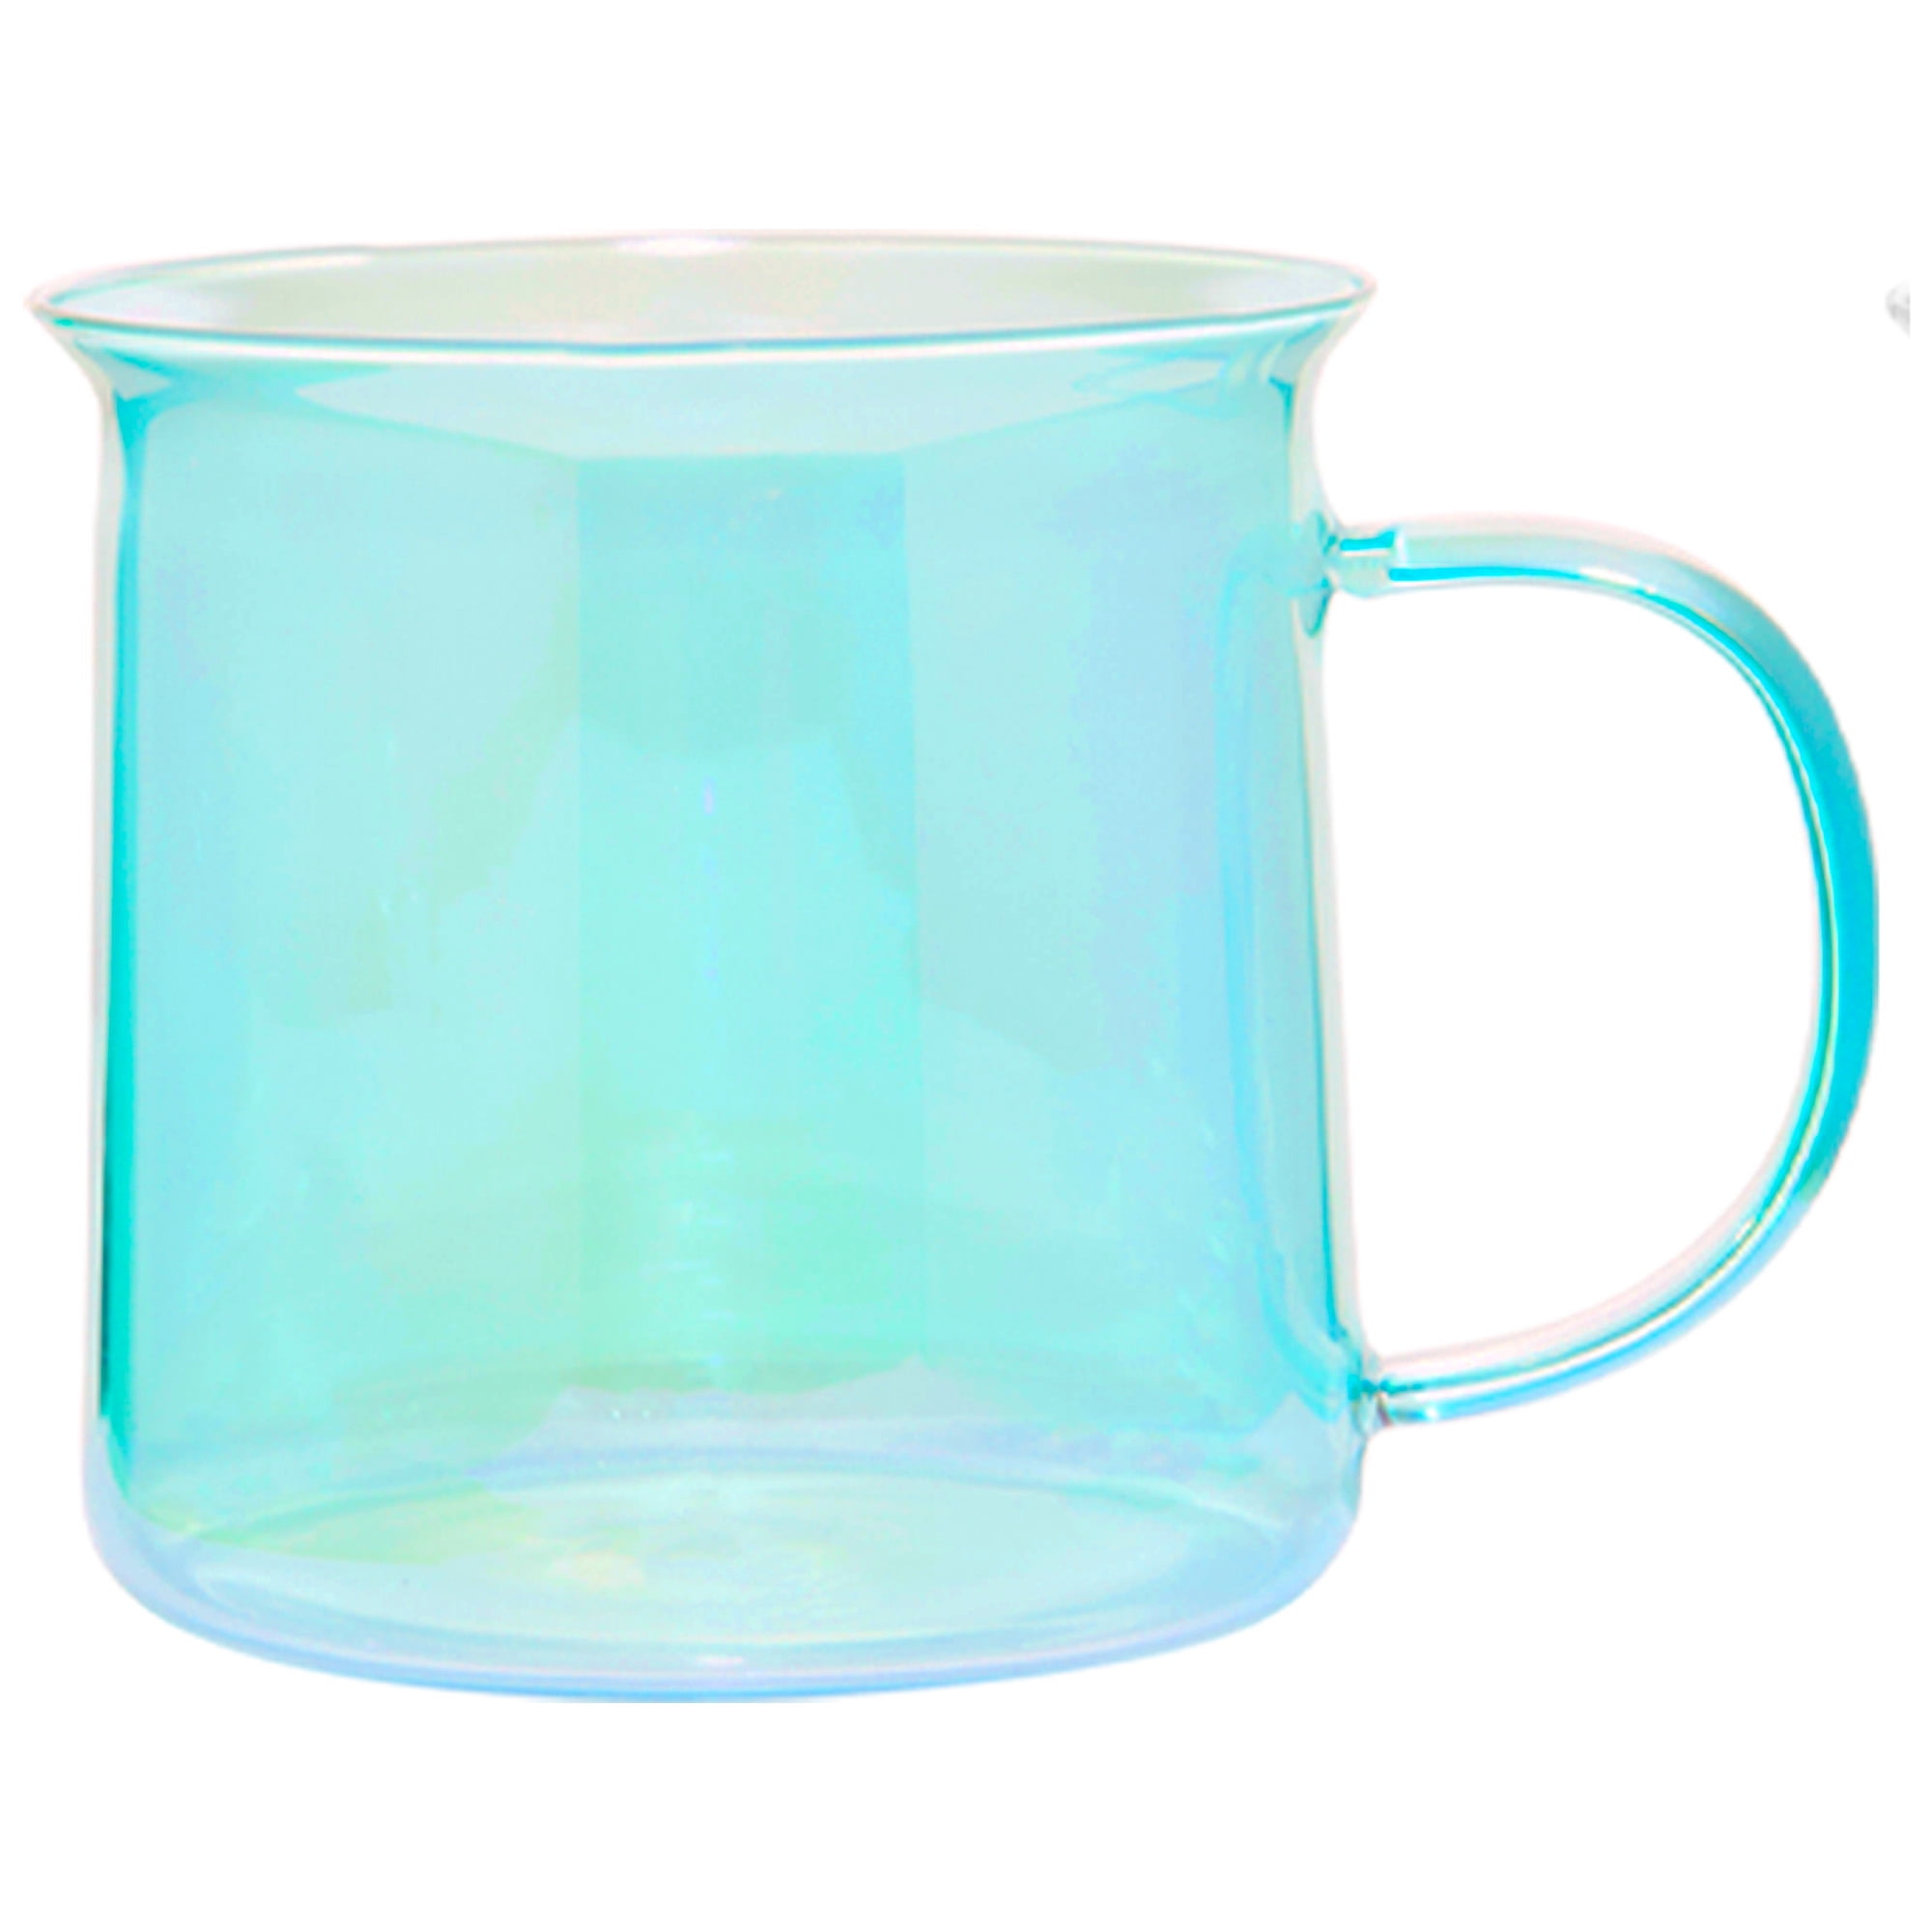 Vintage Retro Pyrex Drink-Ups glass with plastic holder drinkup camping mug 